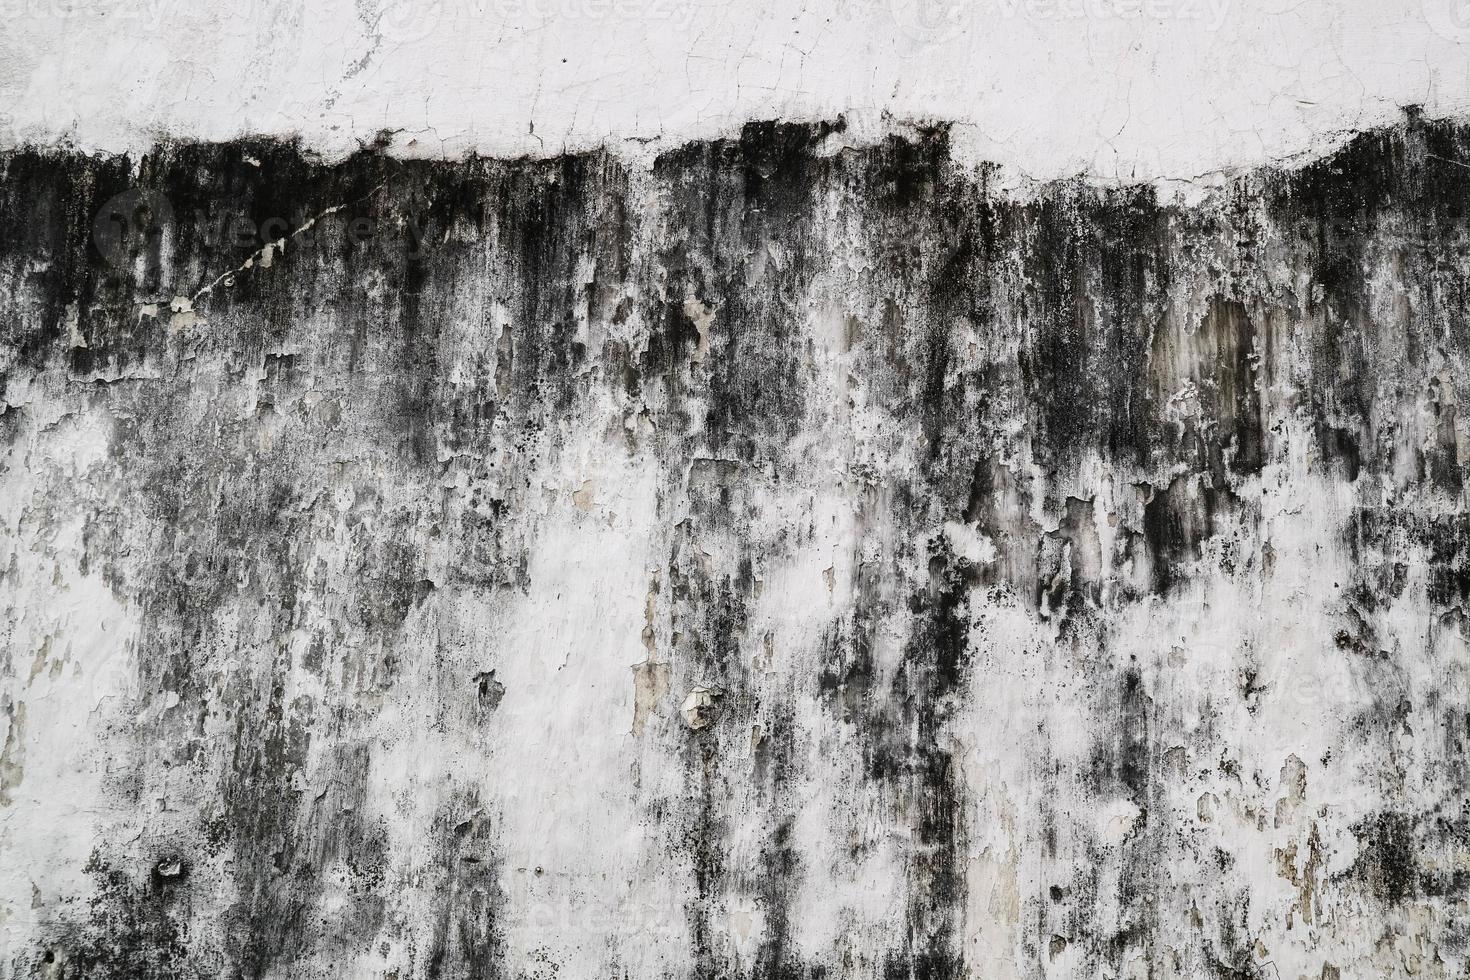 grunge oude ruwe cement muur textuur. abstracte grunge concrete achtergrond voor patroon. foto